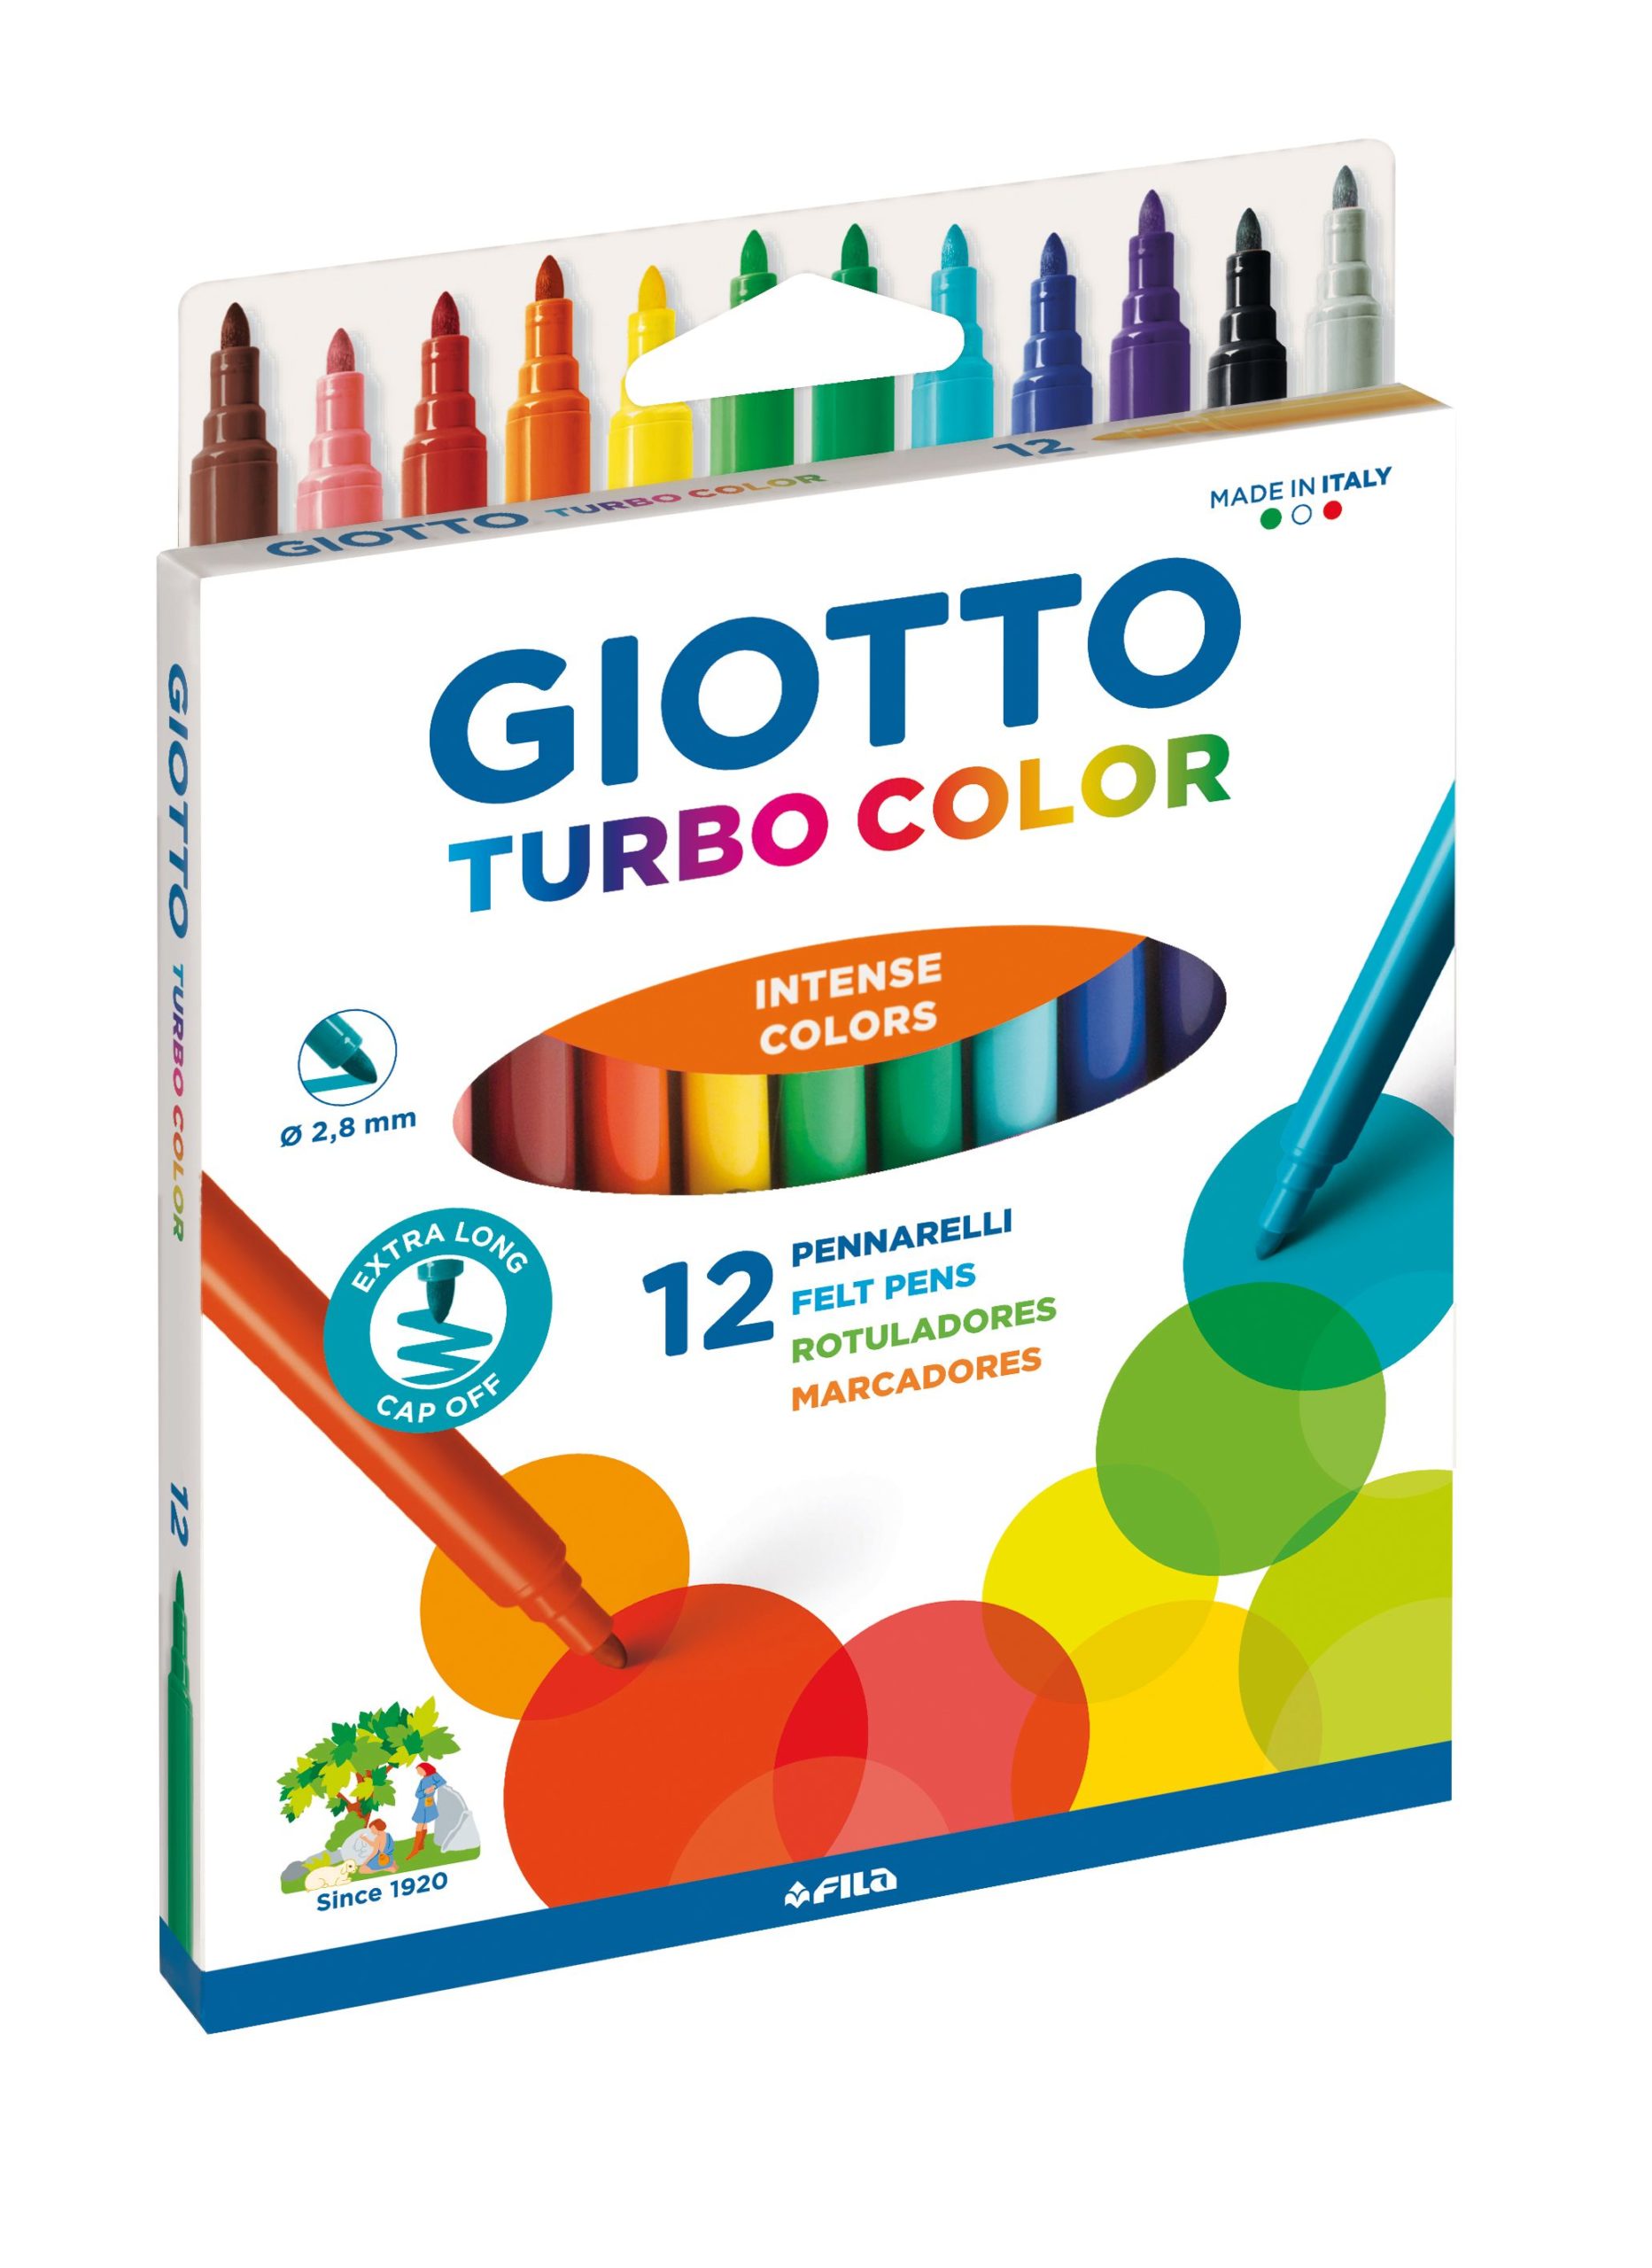 Estuche 12 rotuladores Giotto Turbo Color, colores intensos punta de 2,8mm,  tinta lavable - ArtBendix